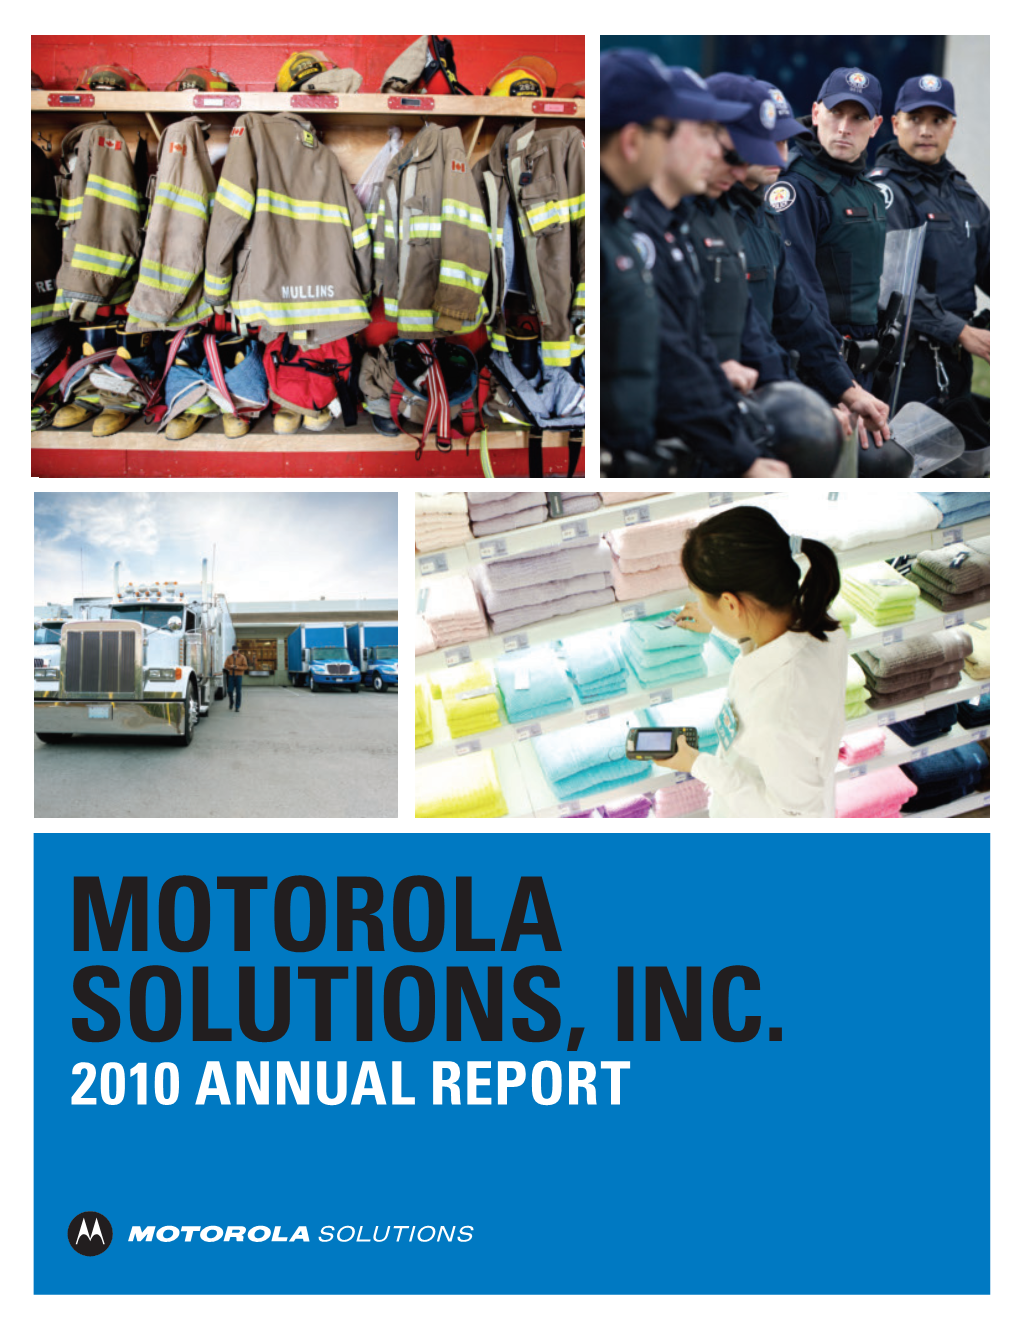 Motorola Solutions, Inc. 2010 Annual Report About Motorola Solutions